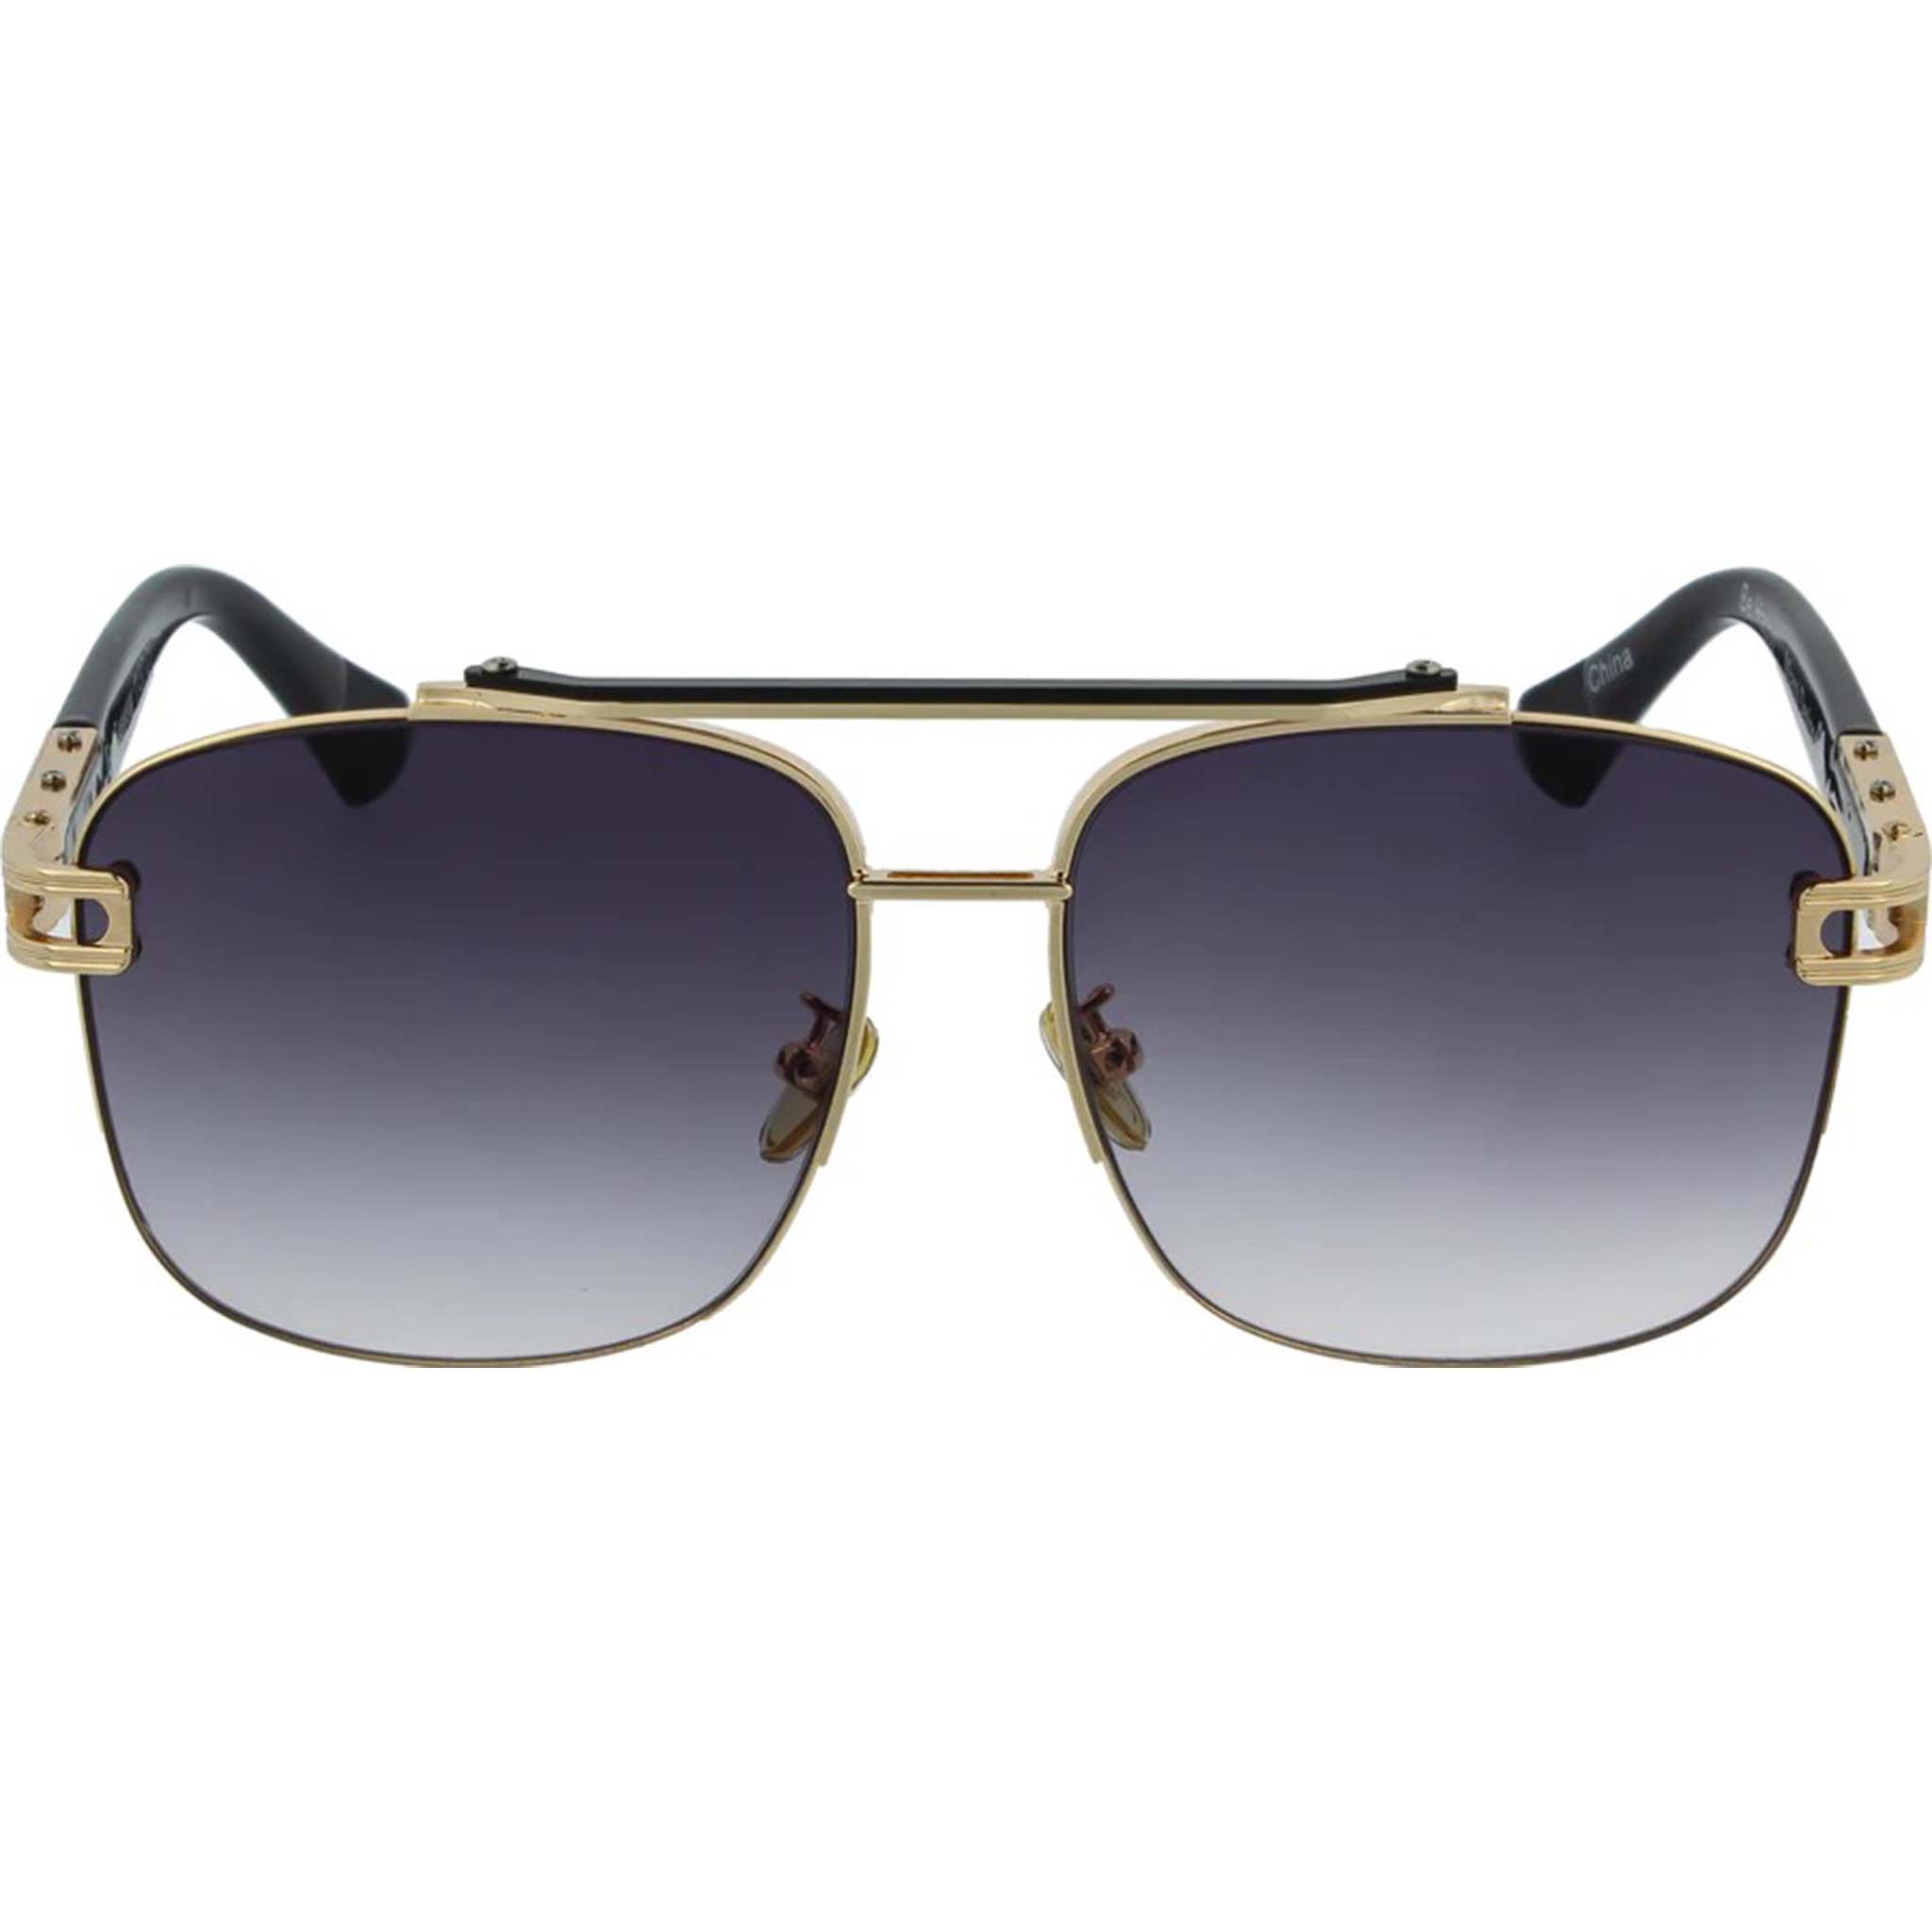 Ego Fashion Sunglasses DKFL1137